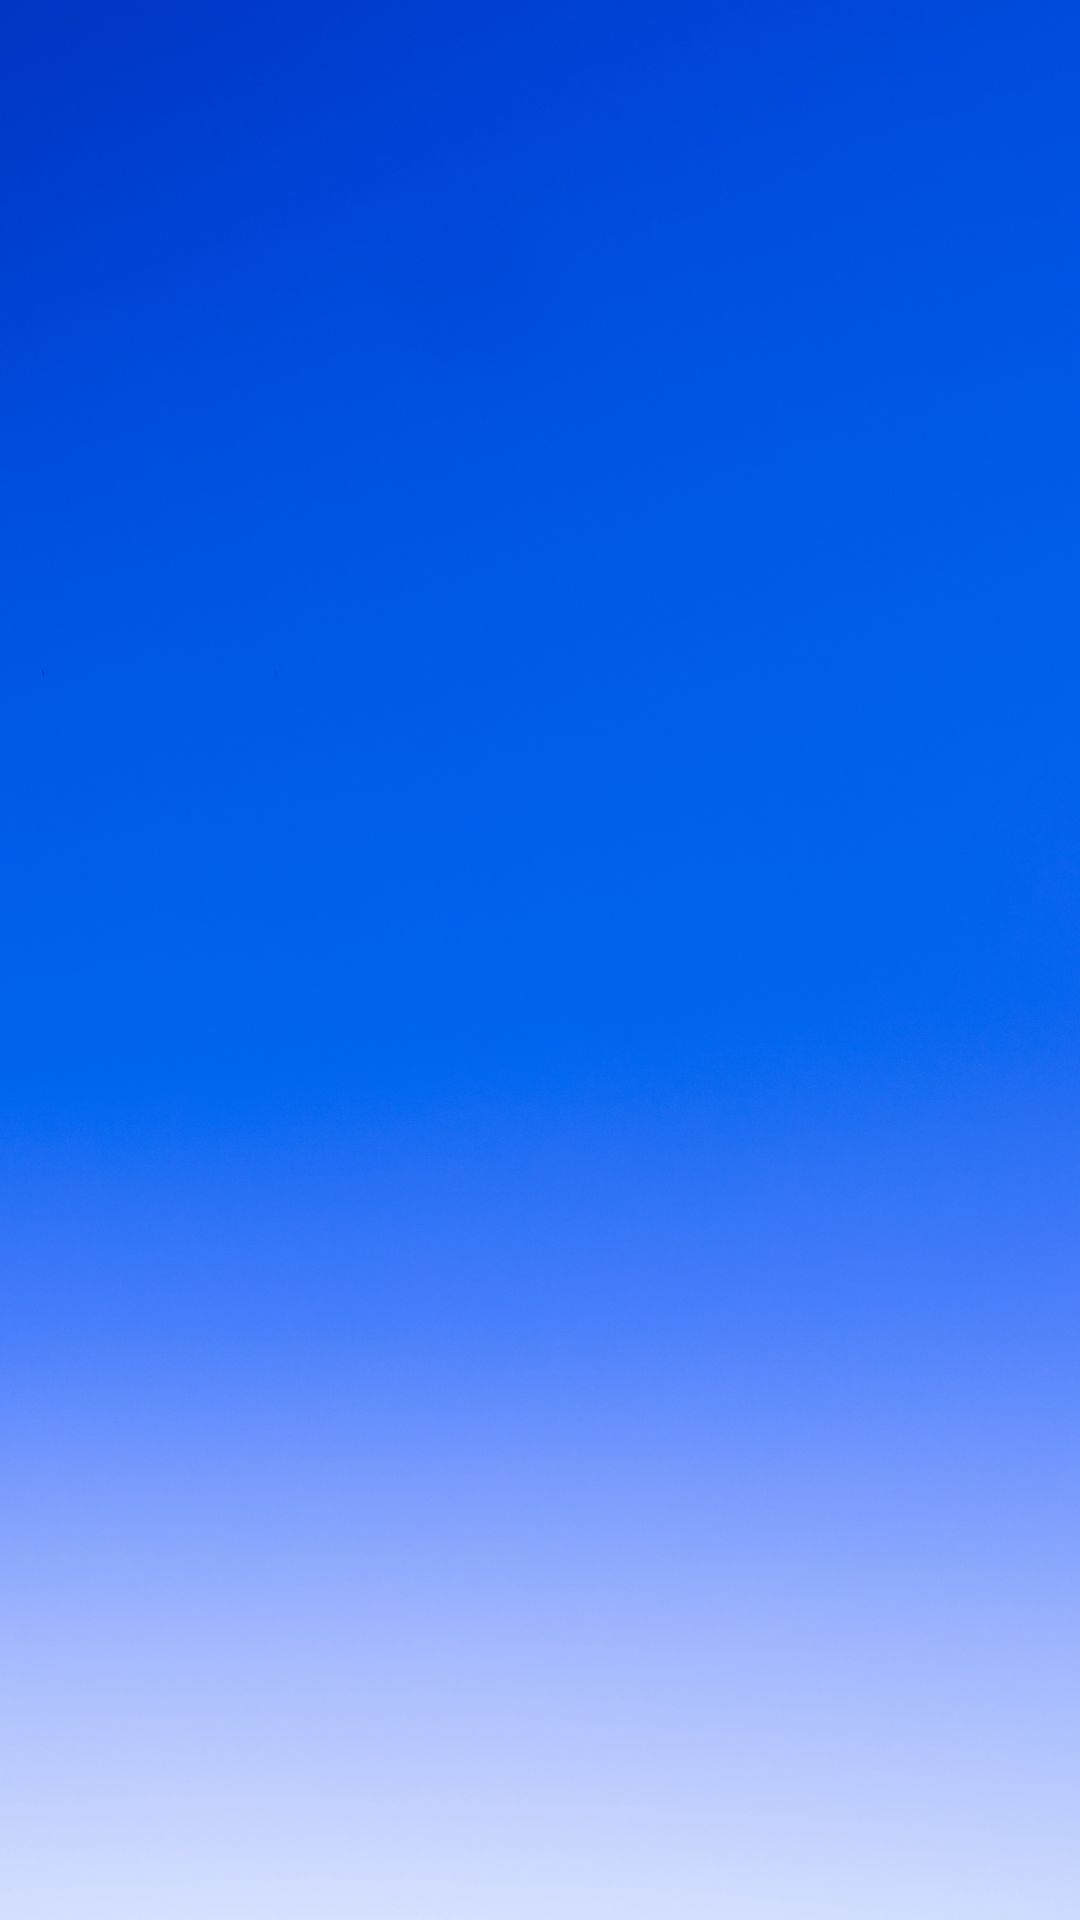 Download wallpaper 1080x1920 sky, blue, color, background samsung galaxy  s4, s5, note, sony xperia z, z1, z2, z3, htc one, lenovo vibe hd background